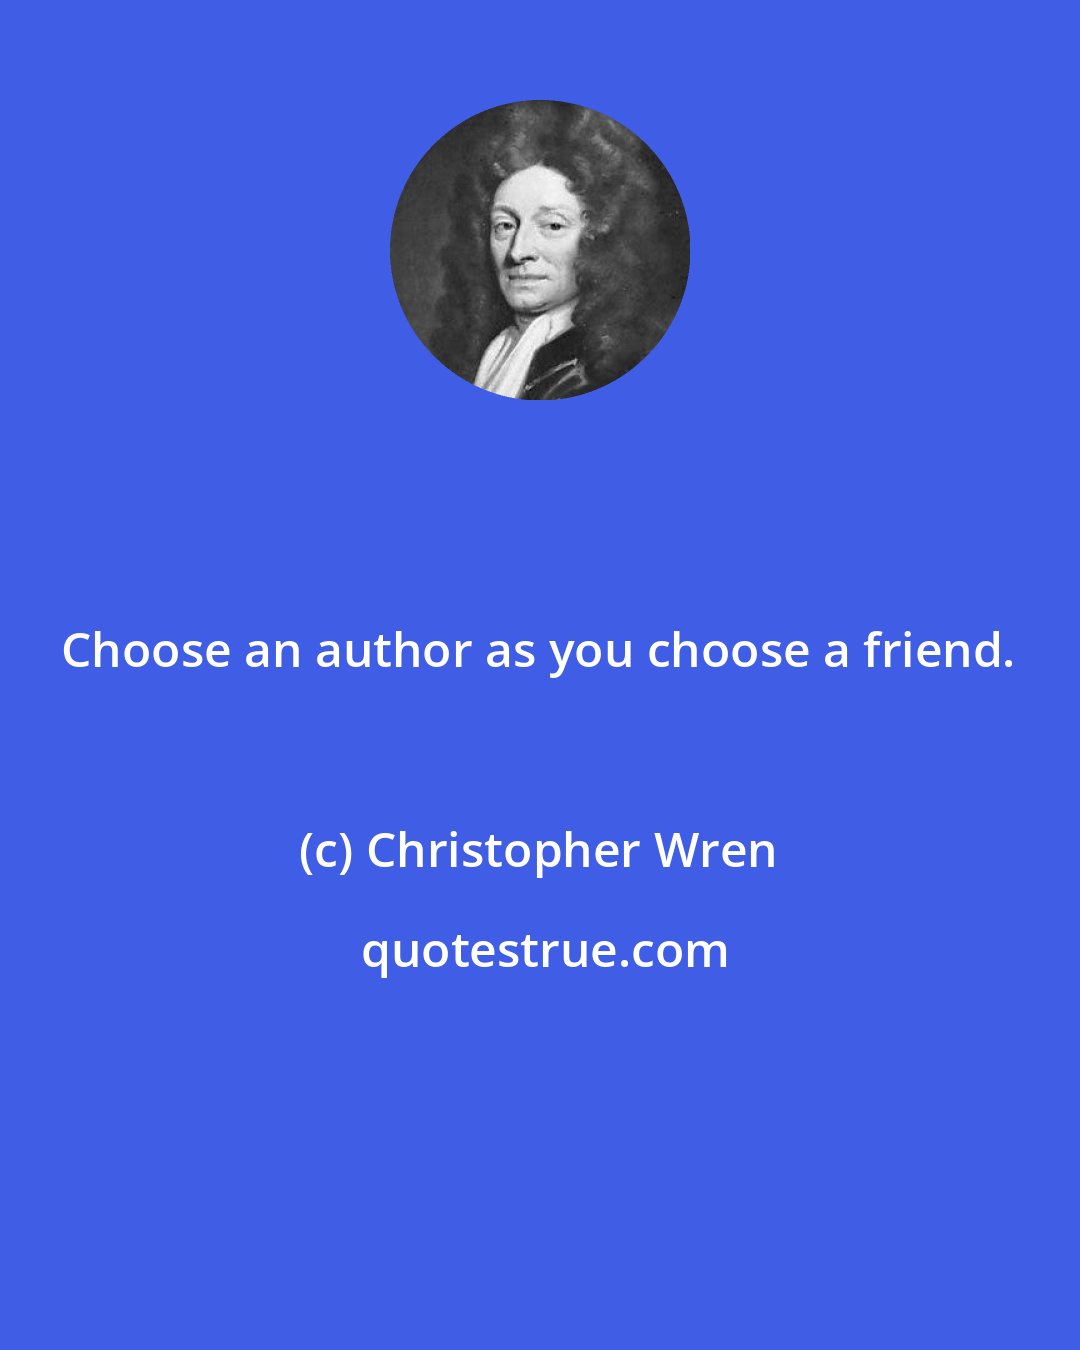 Christopher Wren: Choose an author as you choose a friend.